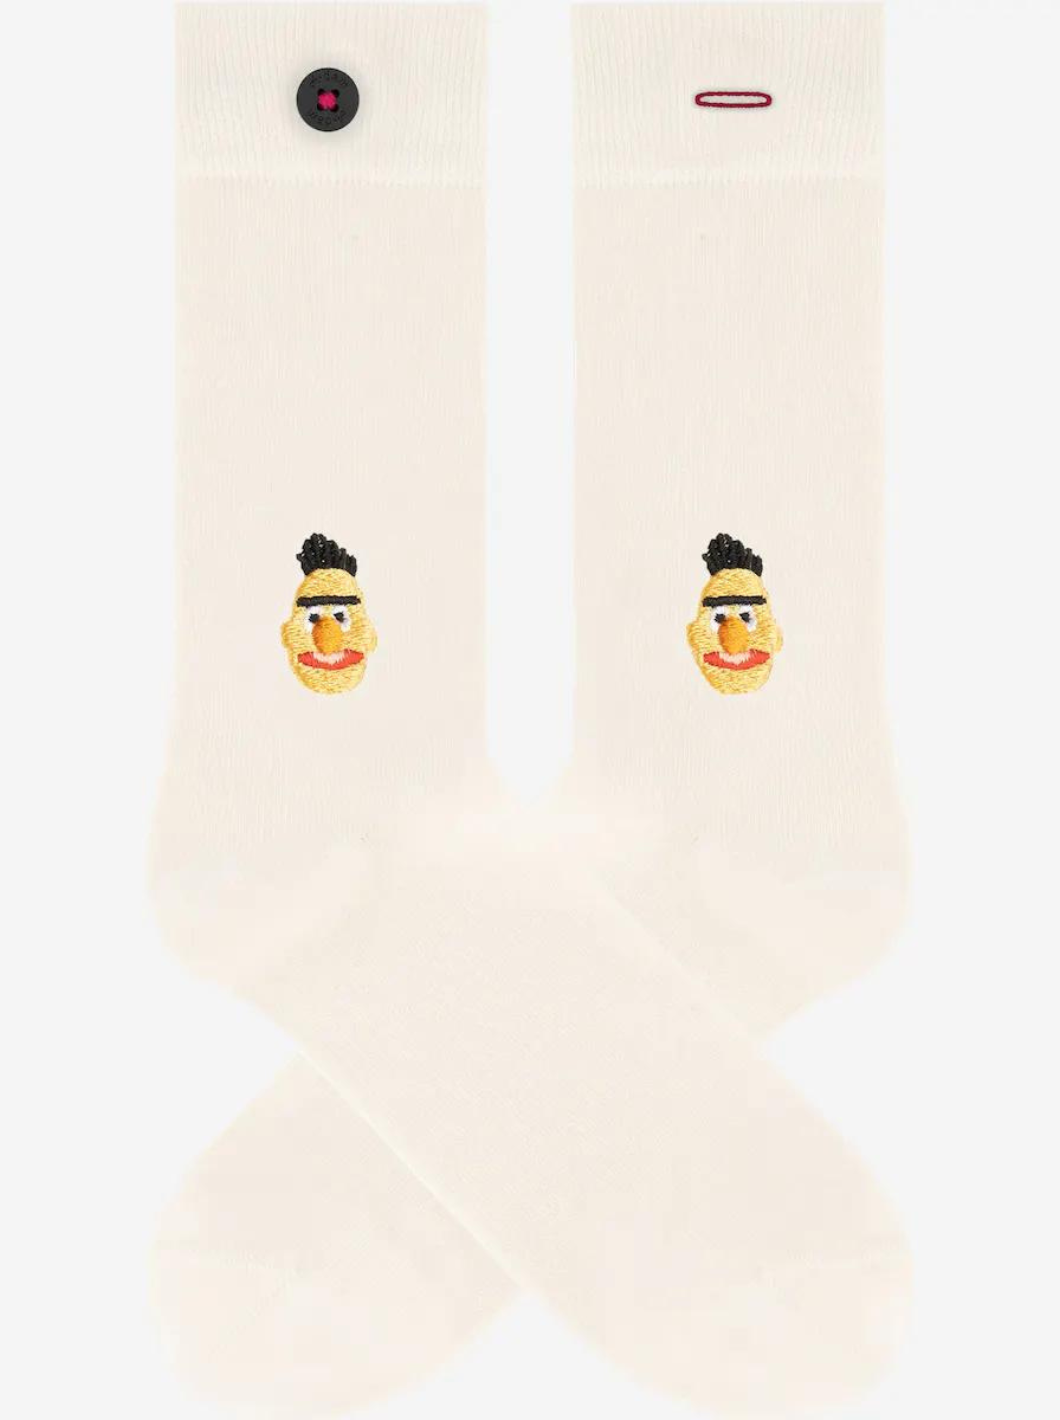 2-PACK - Bio bavlněné ponožky A-dam Sesame